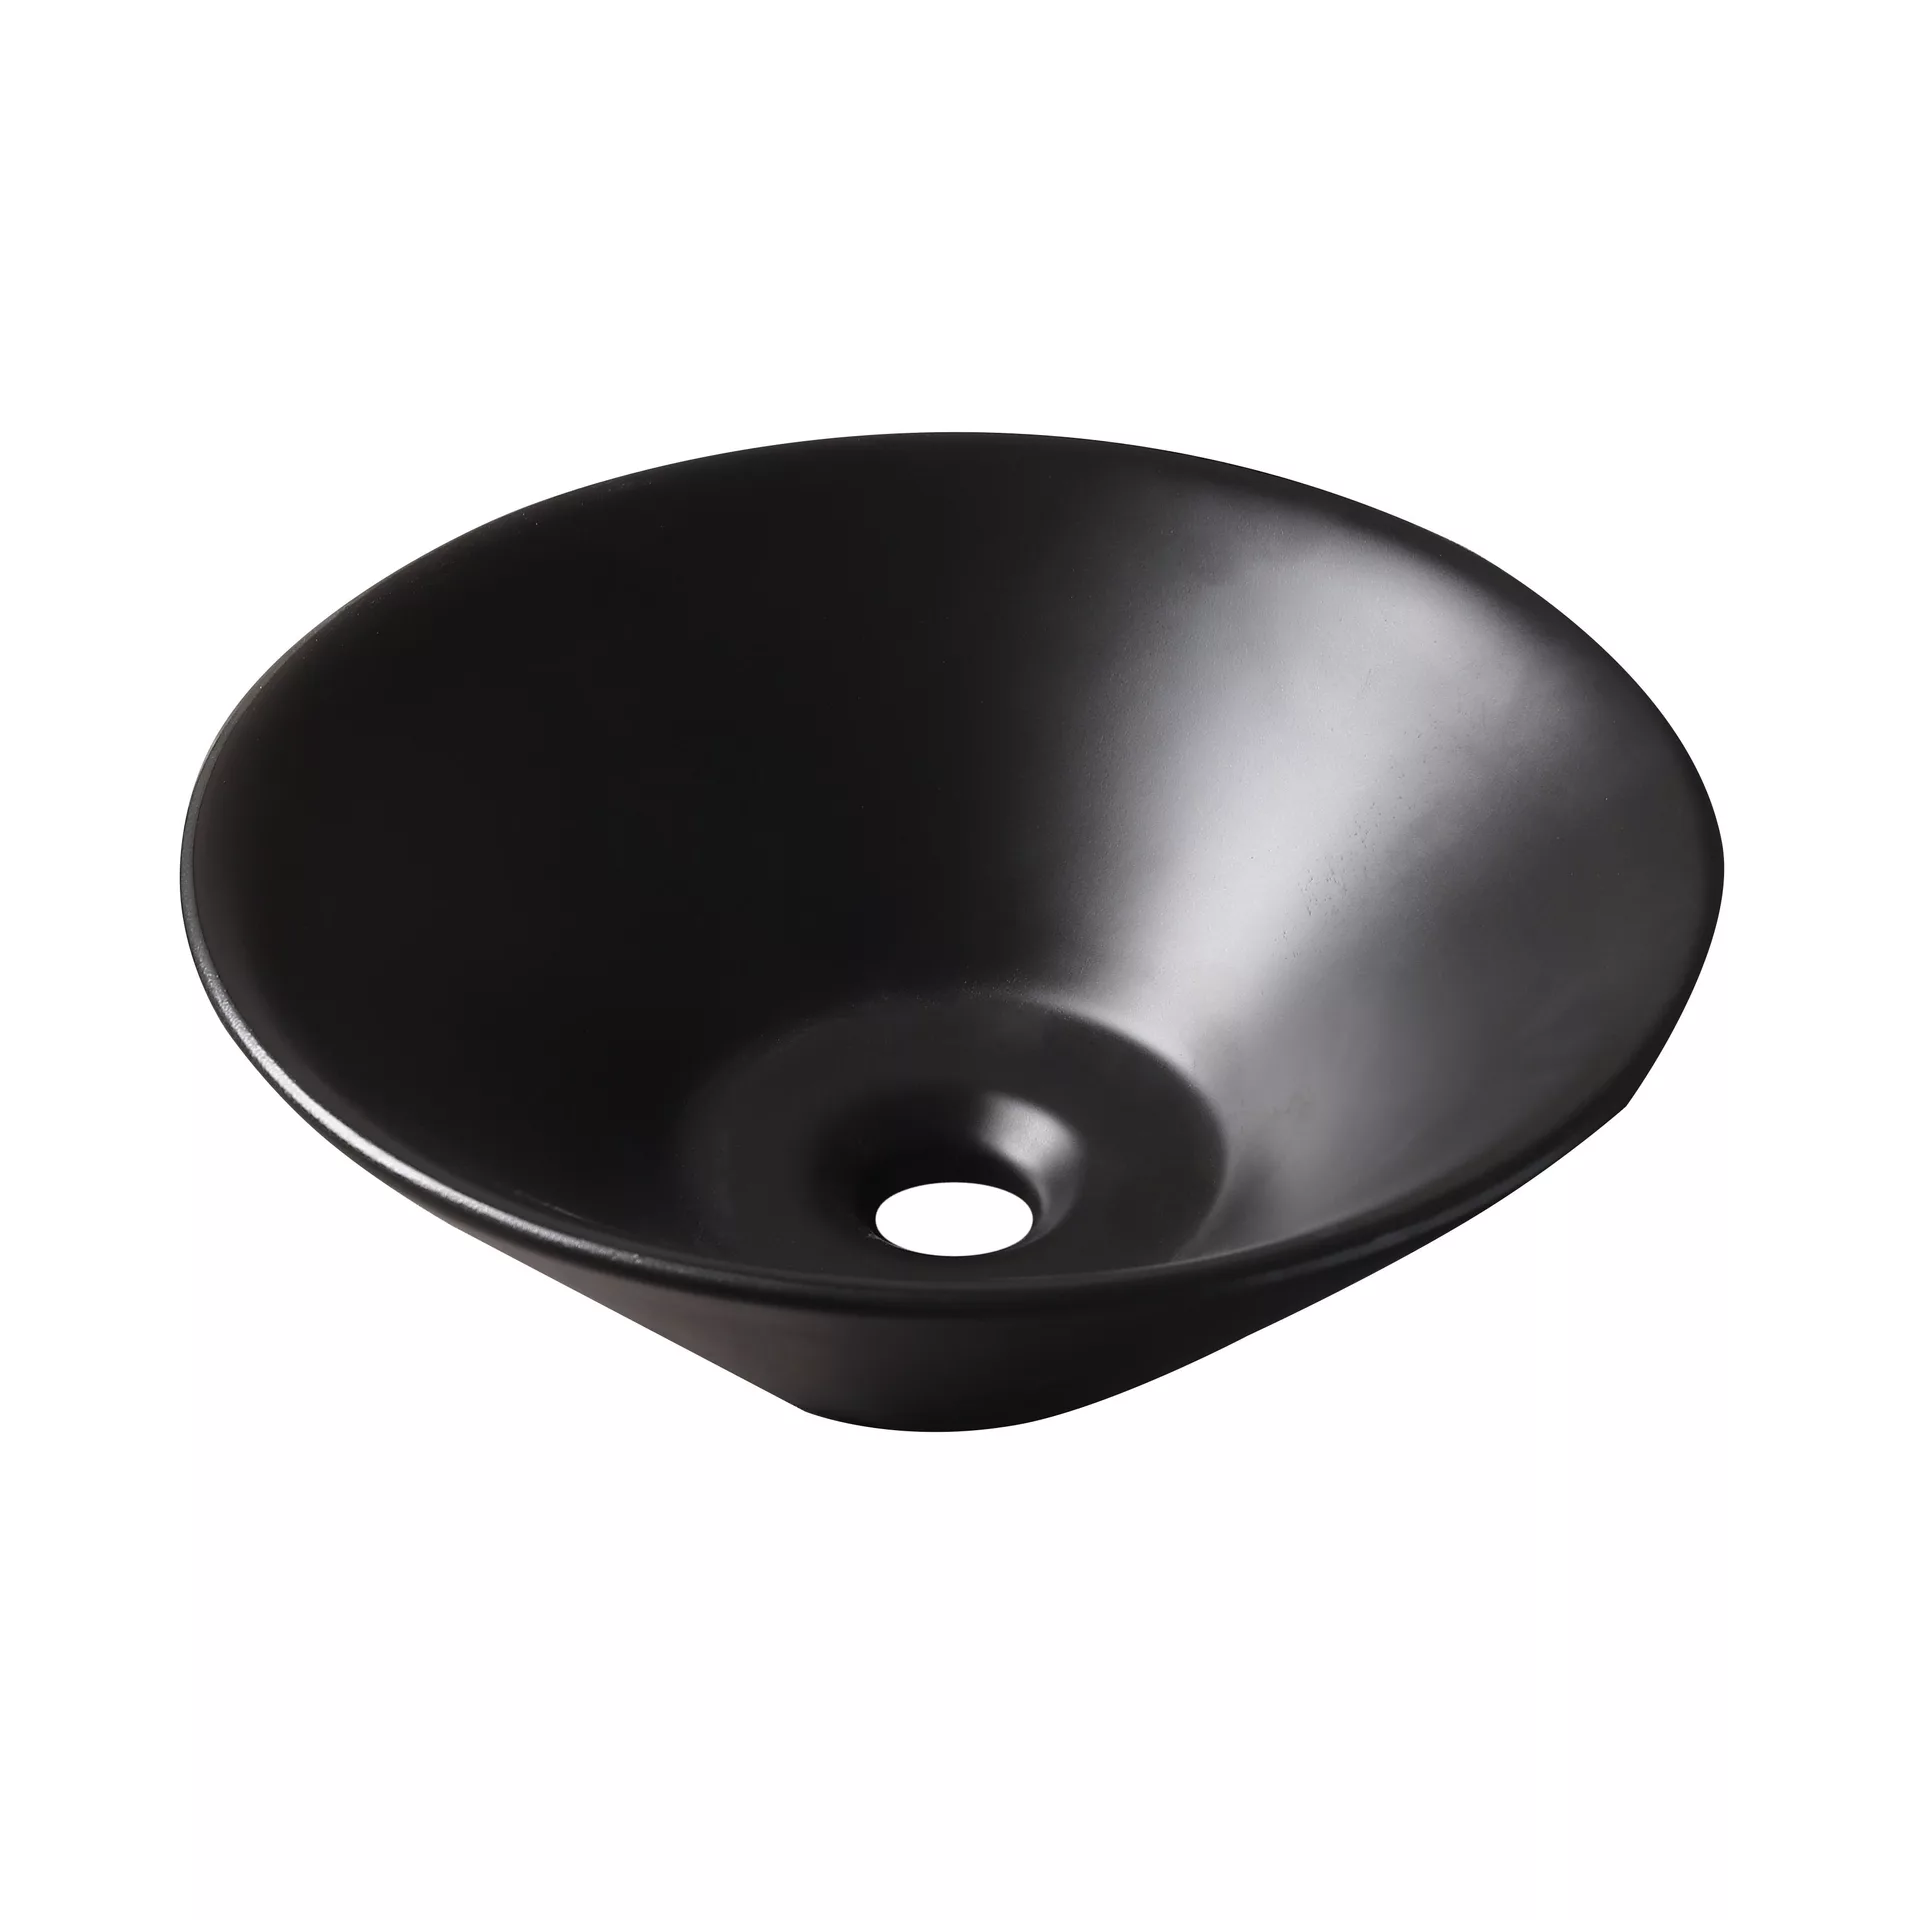 Накладная раковина для ванной GiD N9102bg черная керамическая дверная петля накладная amig черная 554 300х2 2 комплект 2 шт